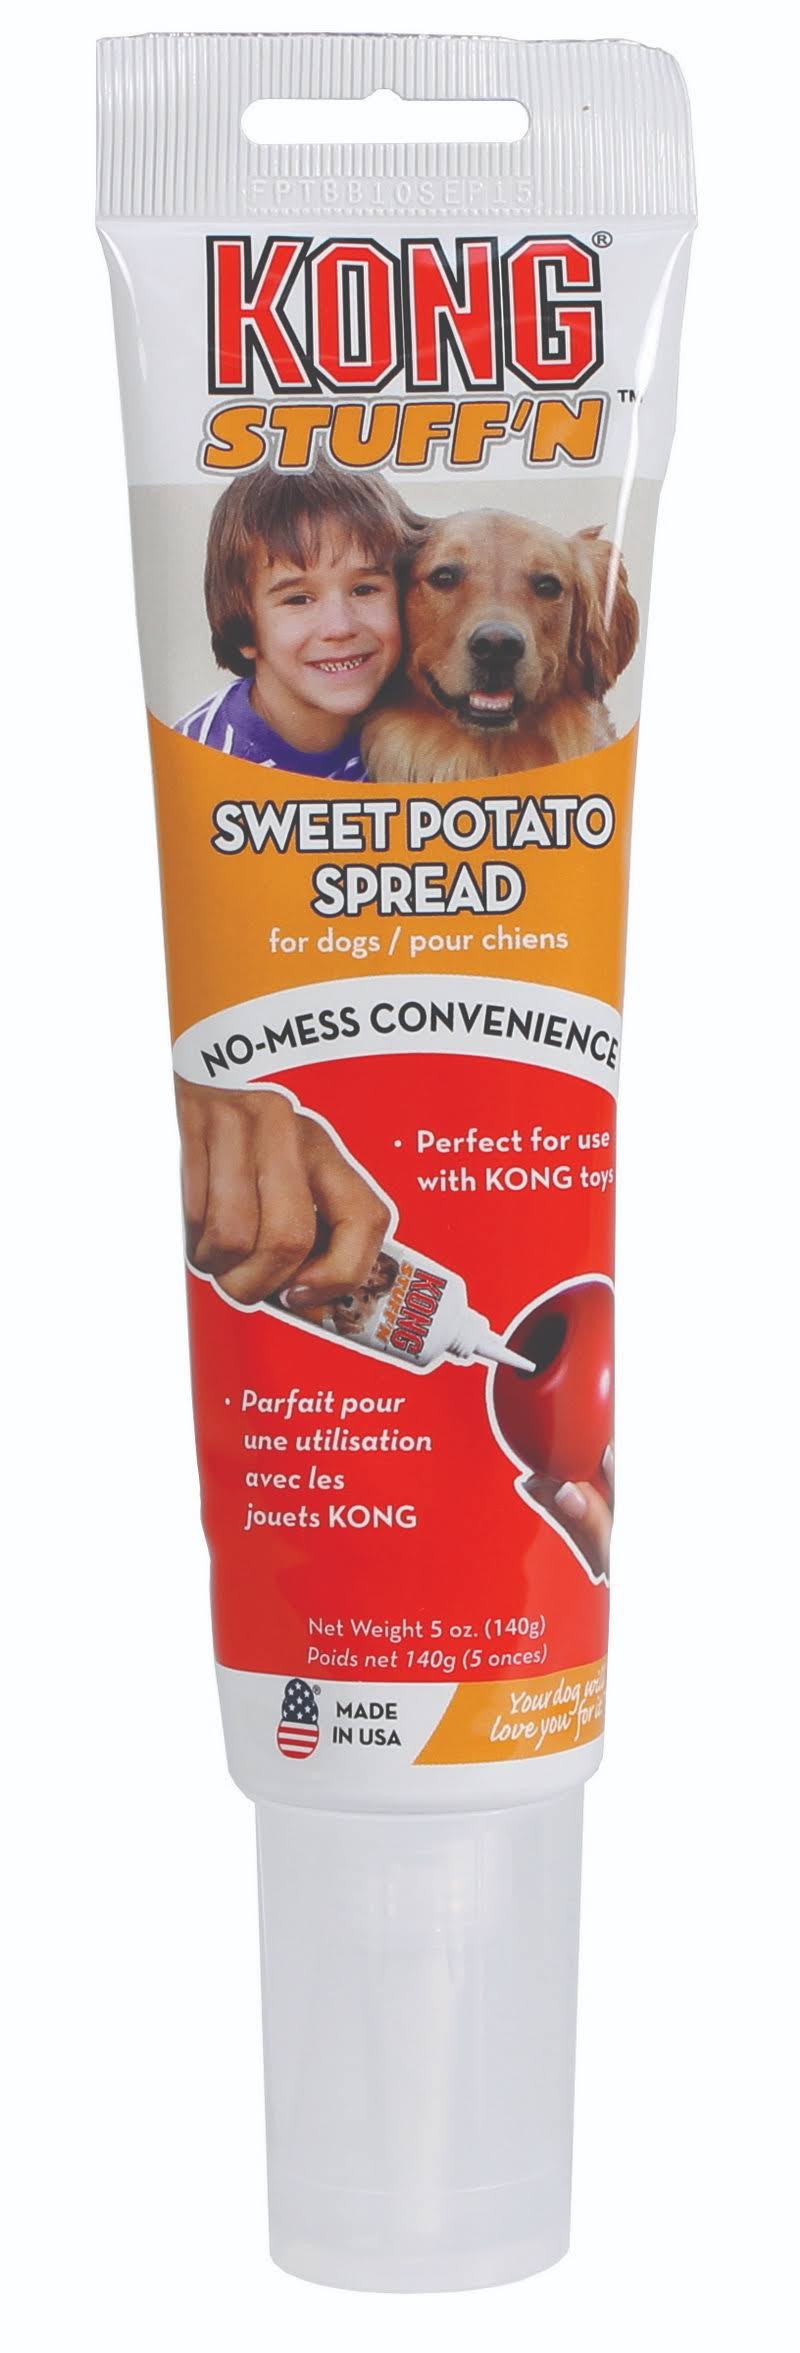 Kong Stuff'N Spread Dog Treat Sweet Potato - 5 Oz